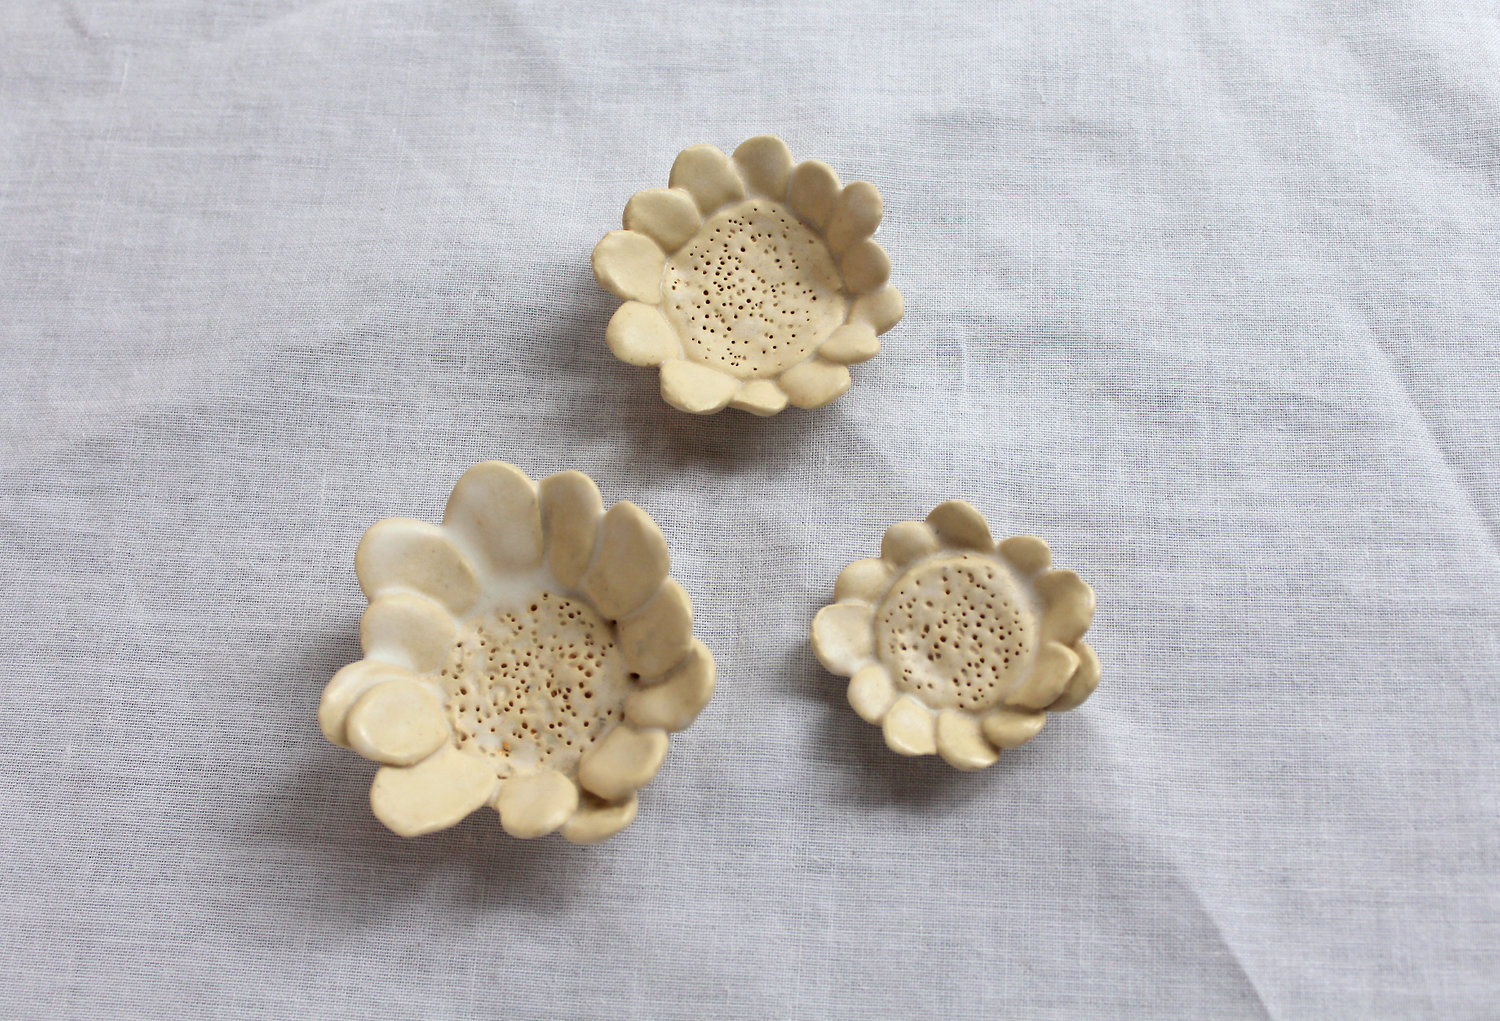 White Clay Flower — Denise Fasanello Flowers